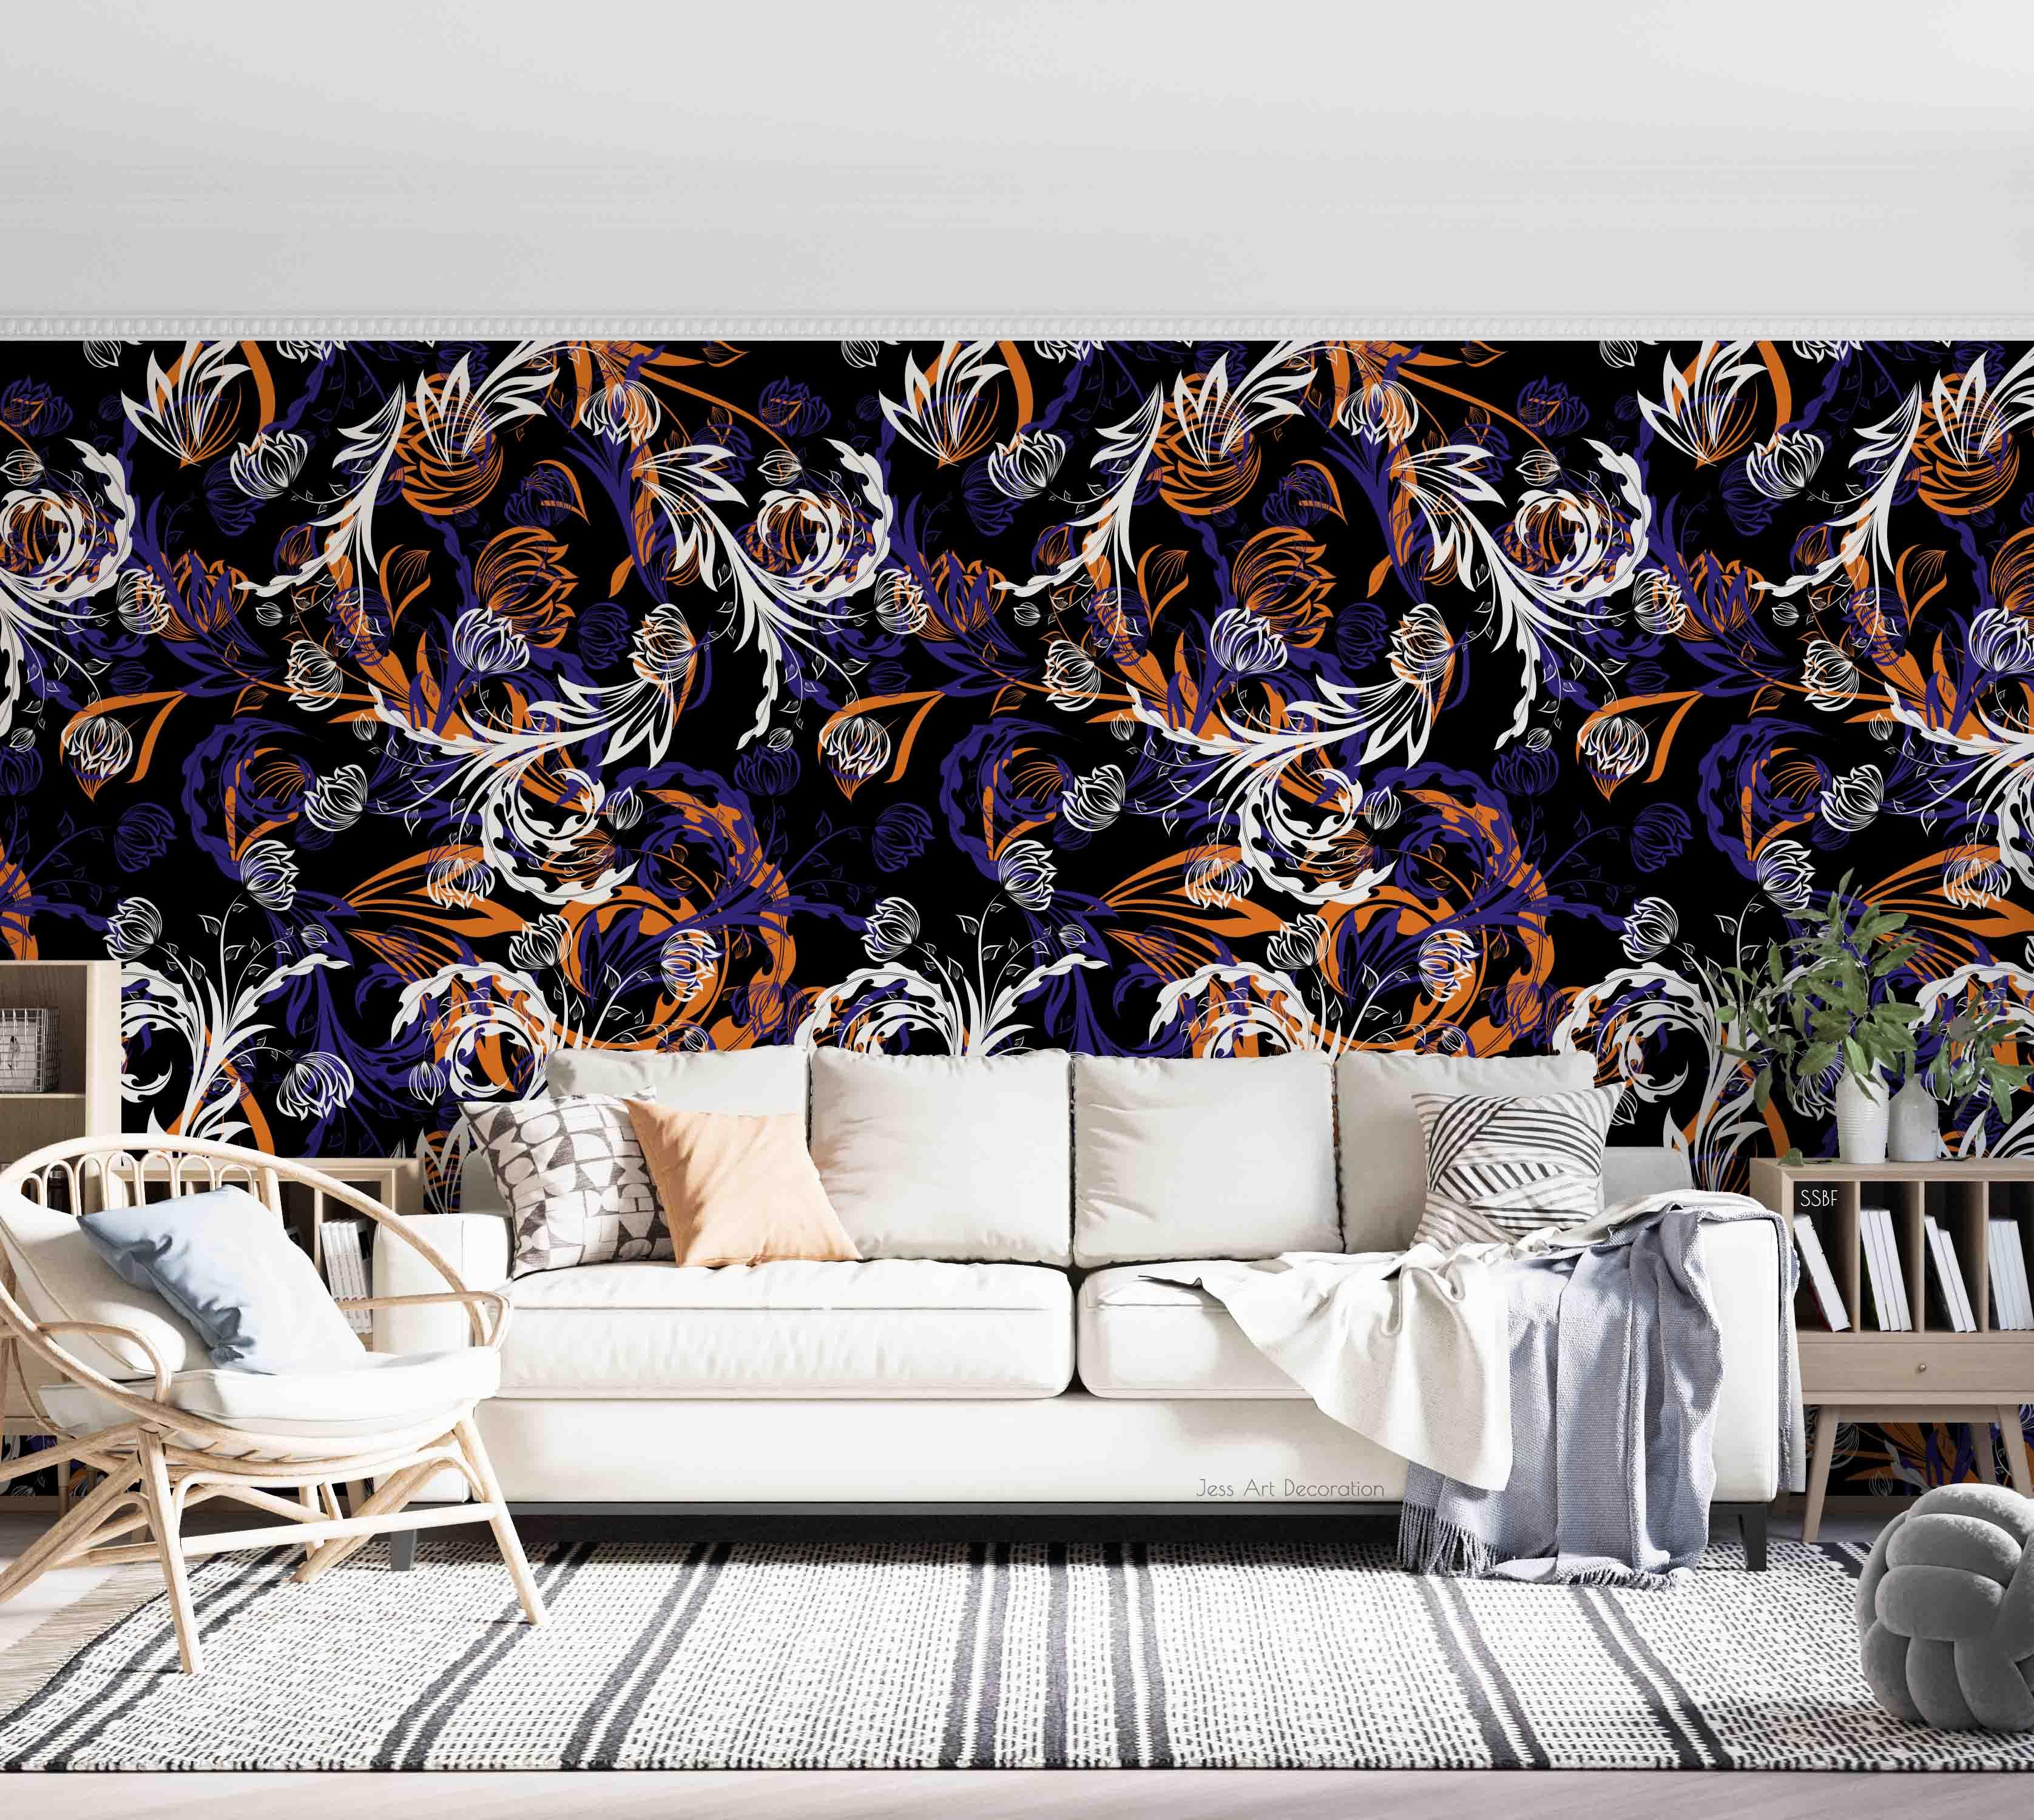 3D Vintage Classic Floral Pattern Wall Mural Wallpaper GD 3500- Jess Art Decoration